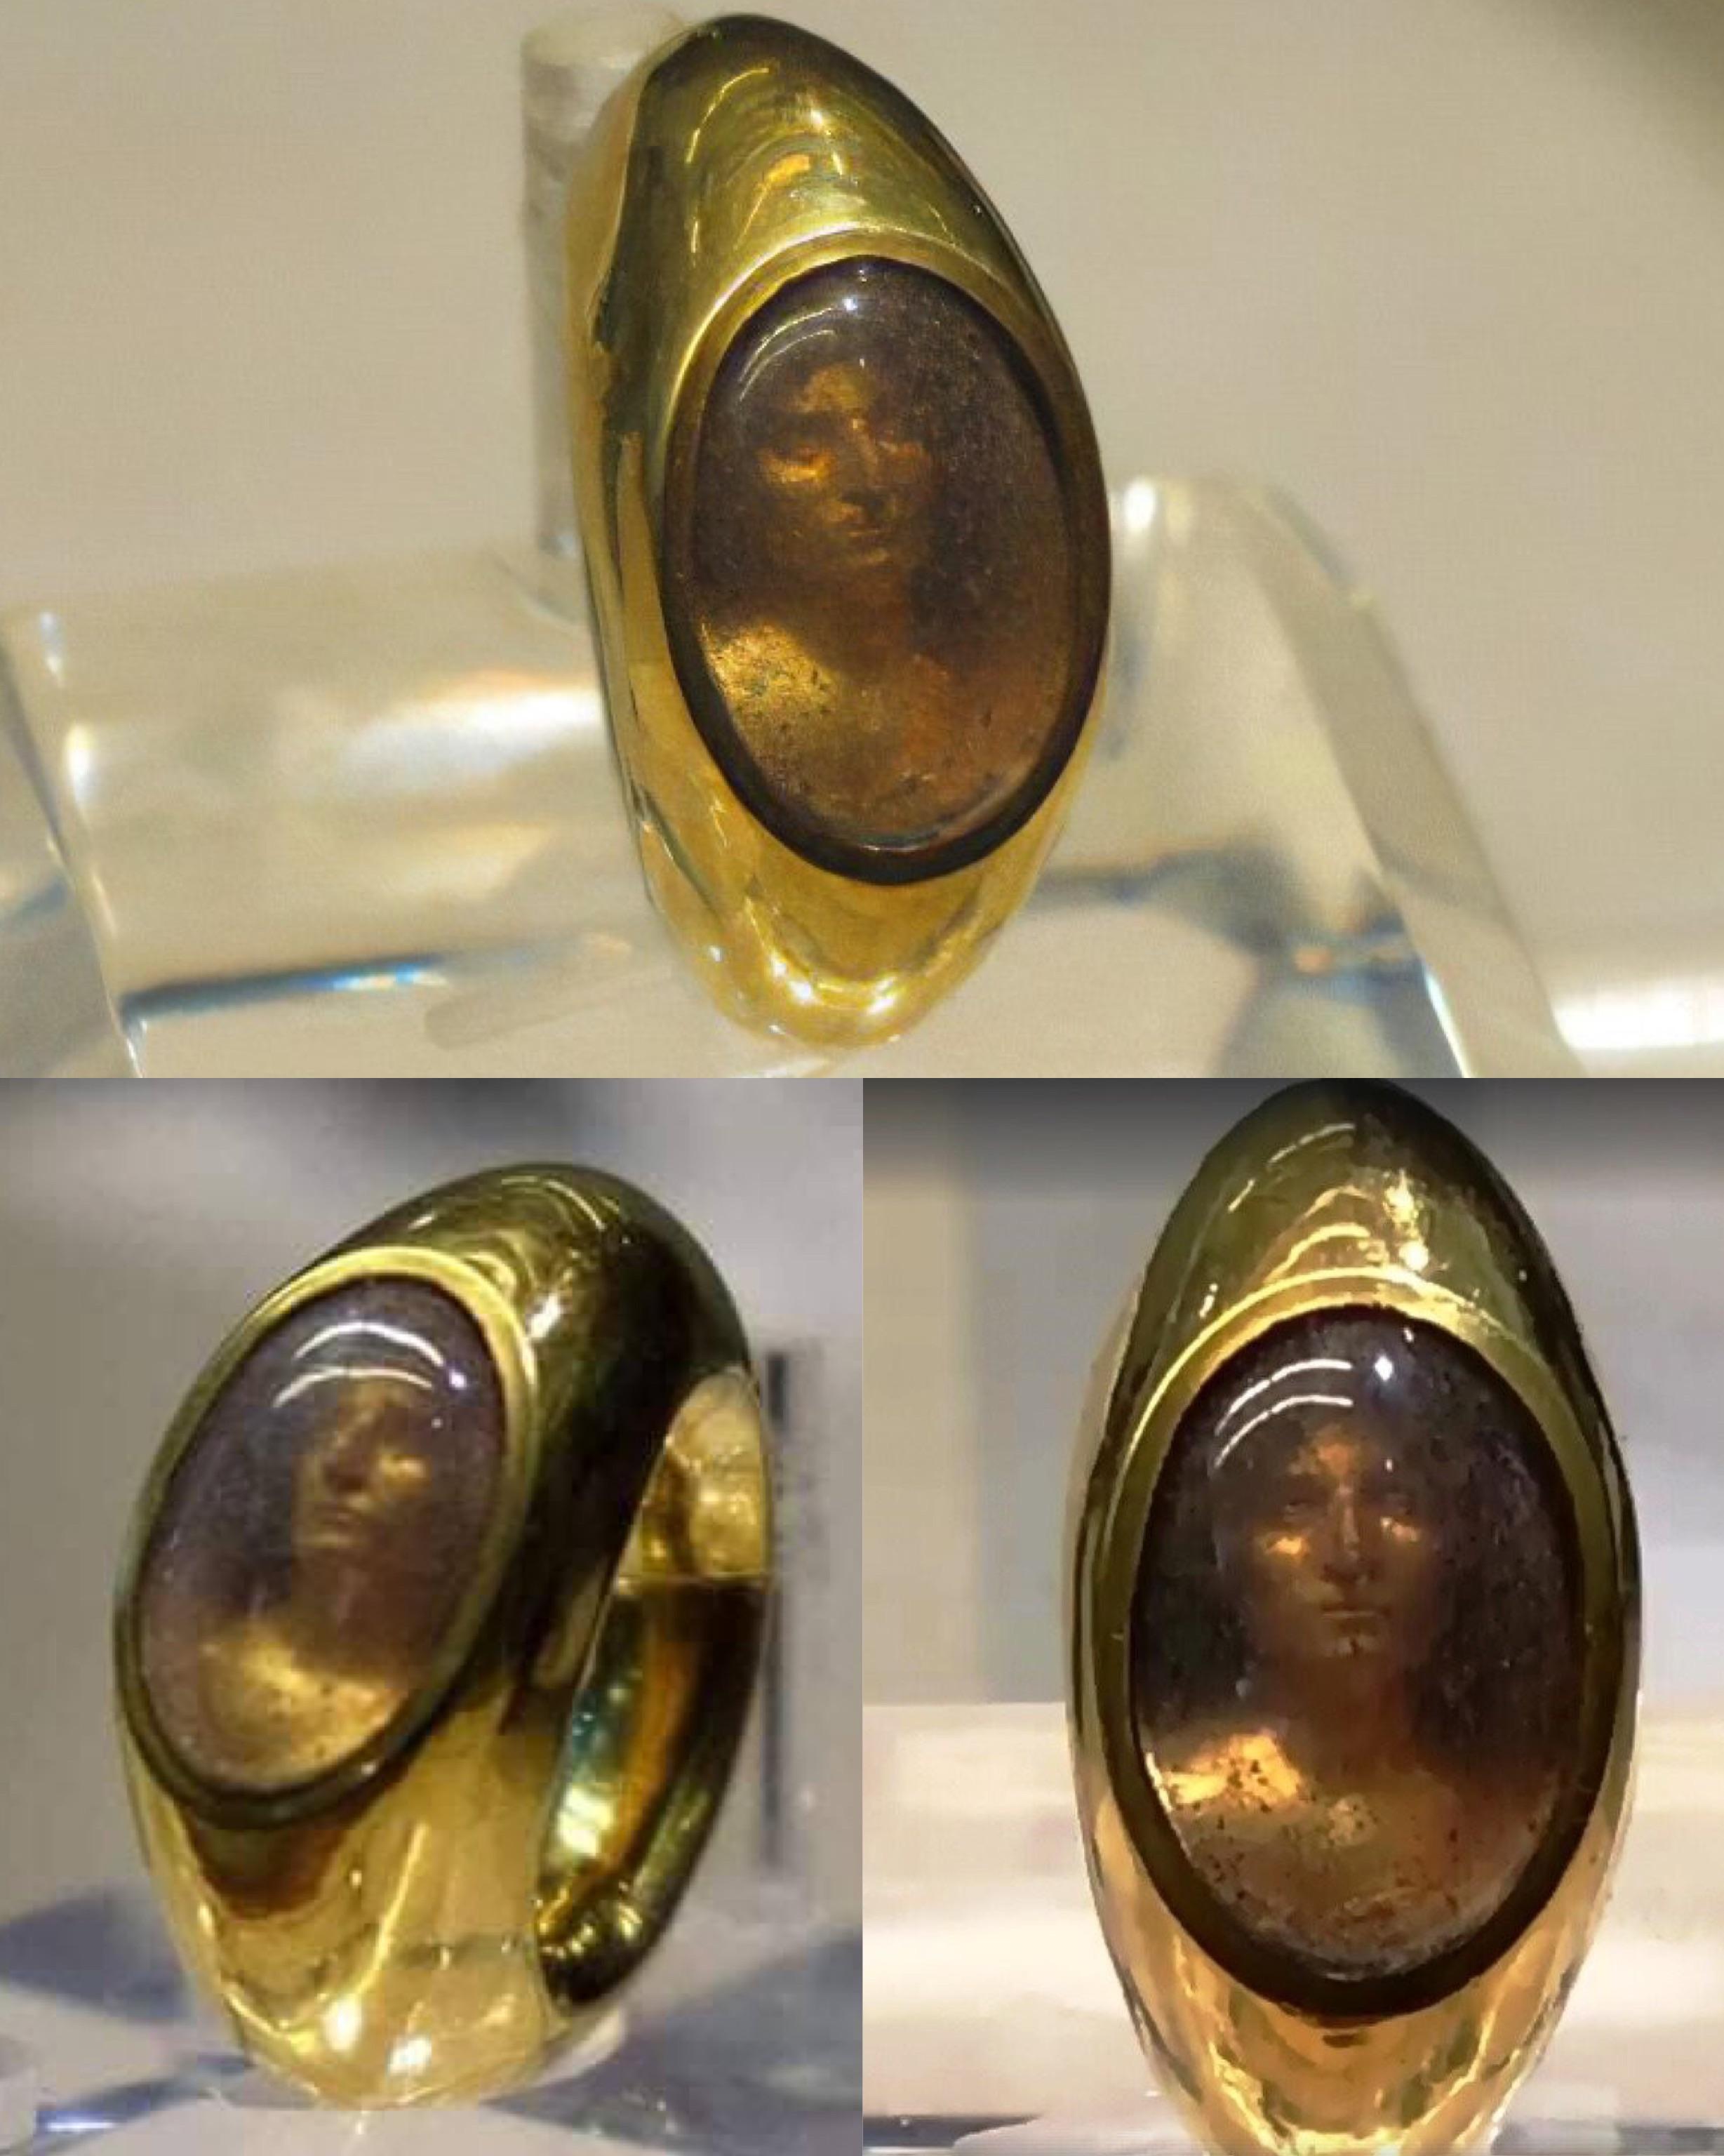 Roman ring with hologram effect found at the Grottaferrata necropolis in the grave of Aebutia Quarta, a 1st century CE noblewoman.jpeg